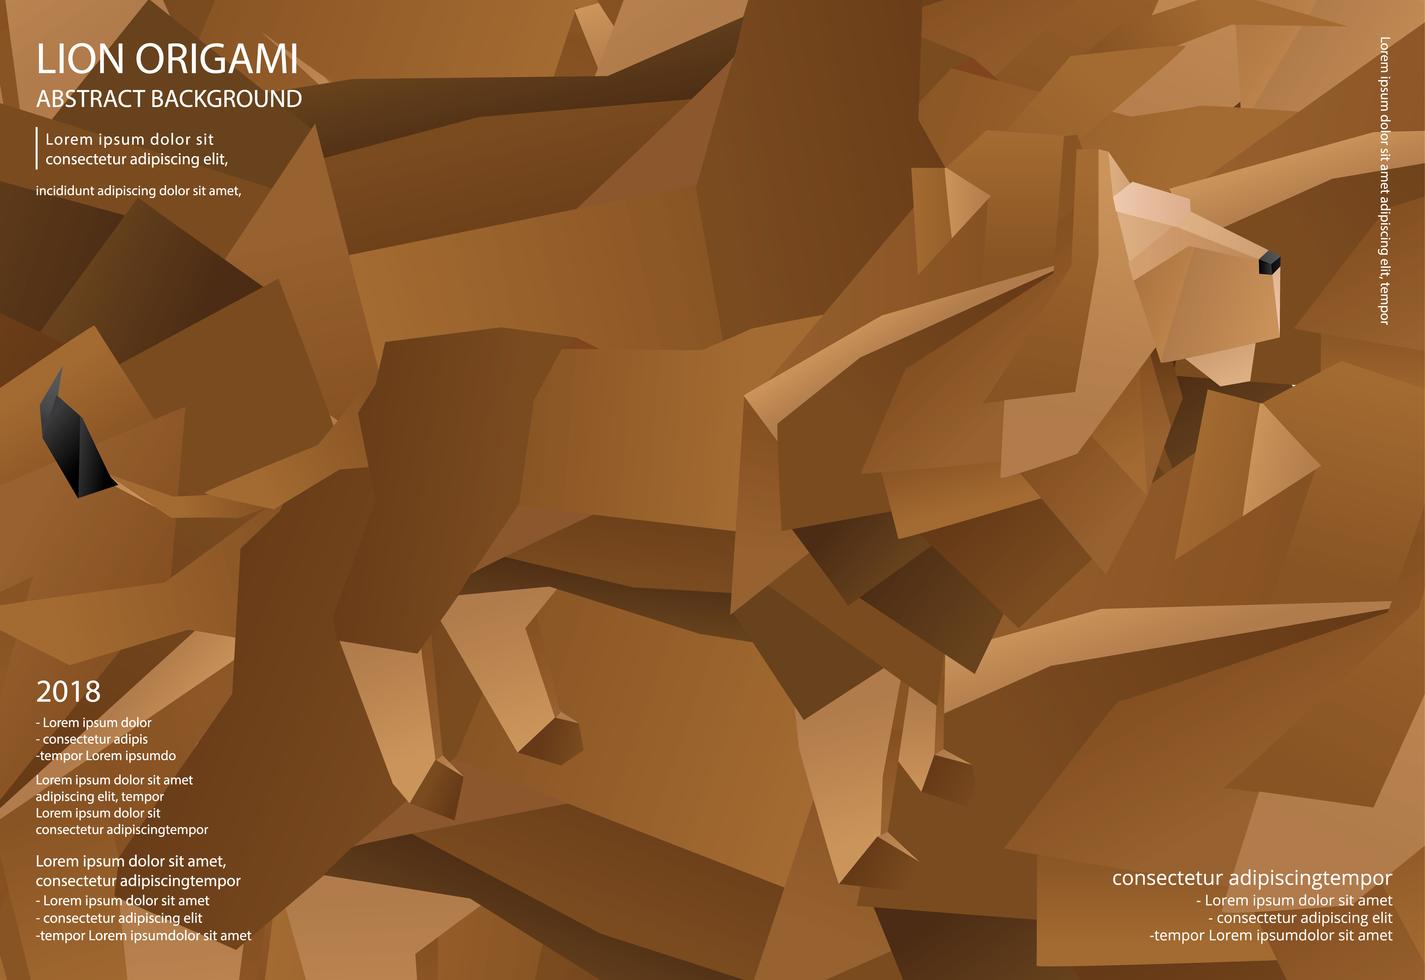 Löwe Origami abstrakte Hintergrund Vektor-Illustration vektor